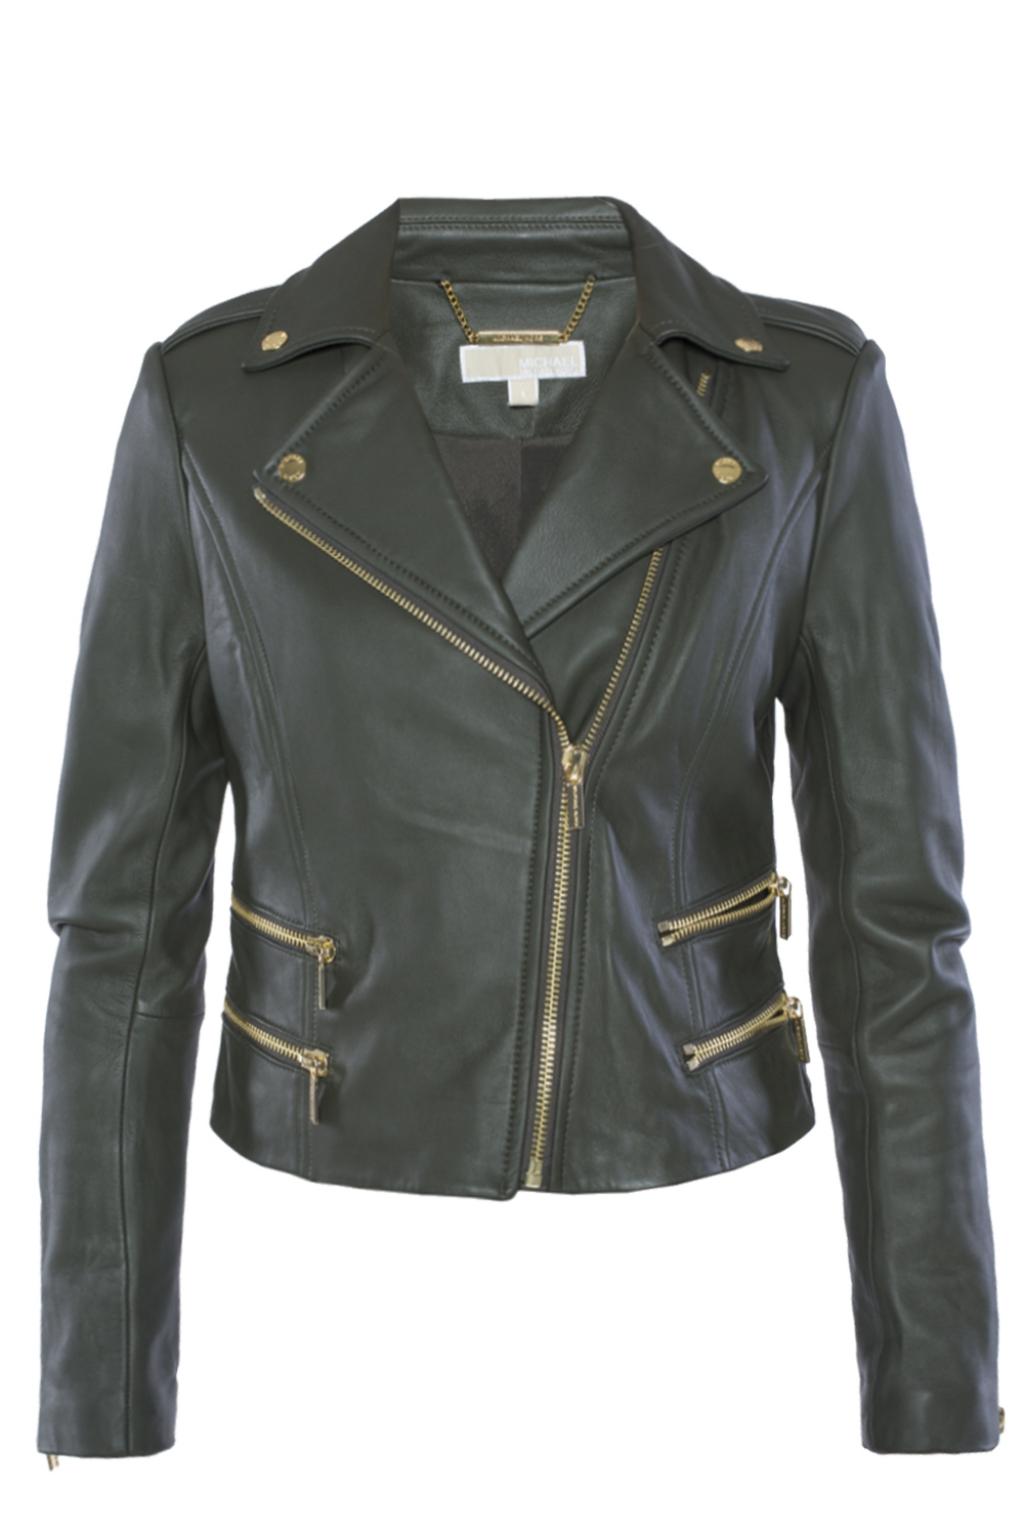 michael kors leather jacket canada